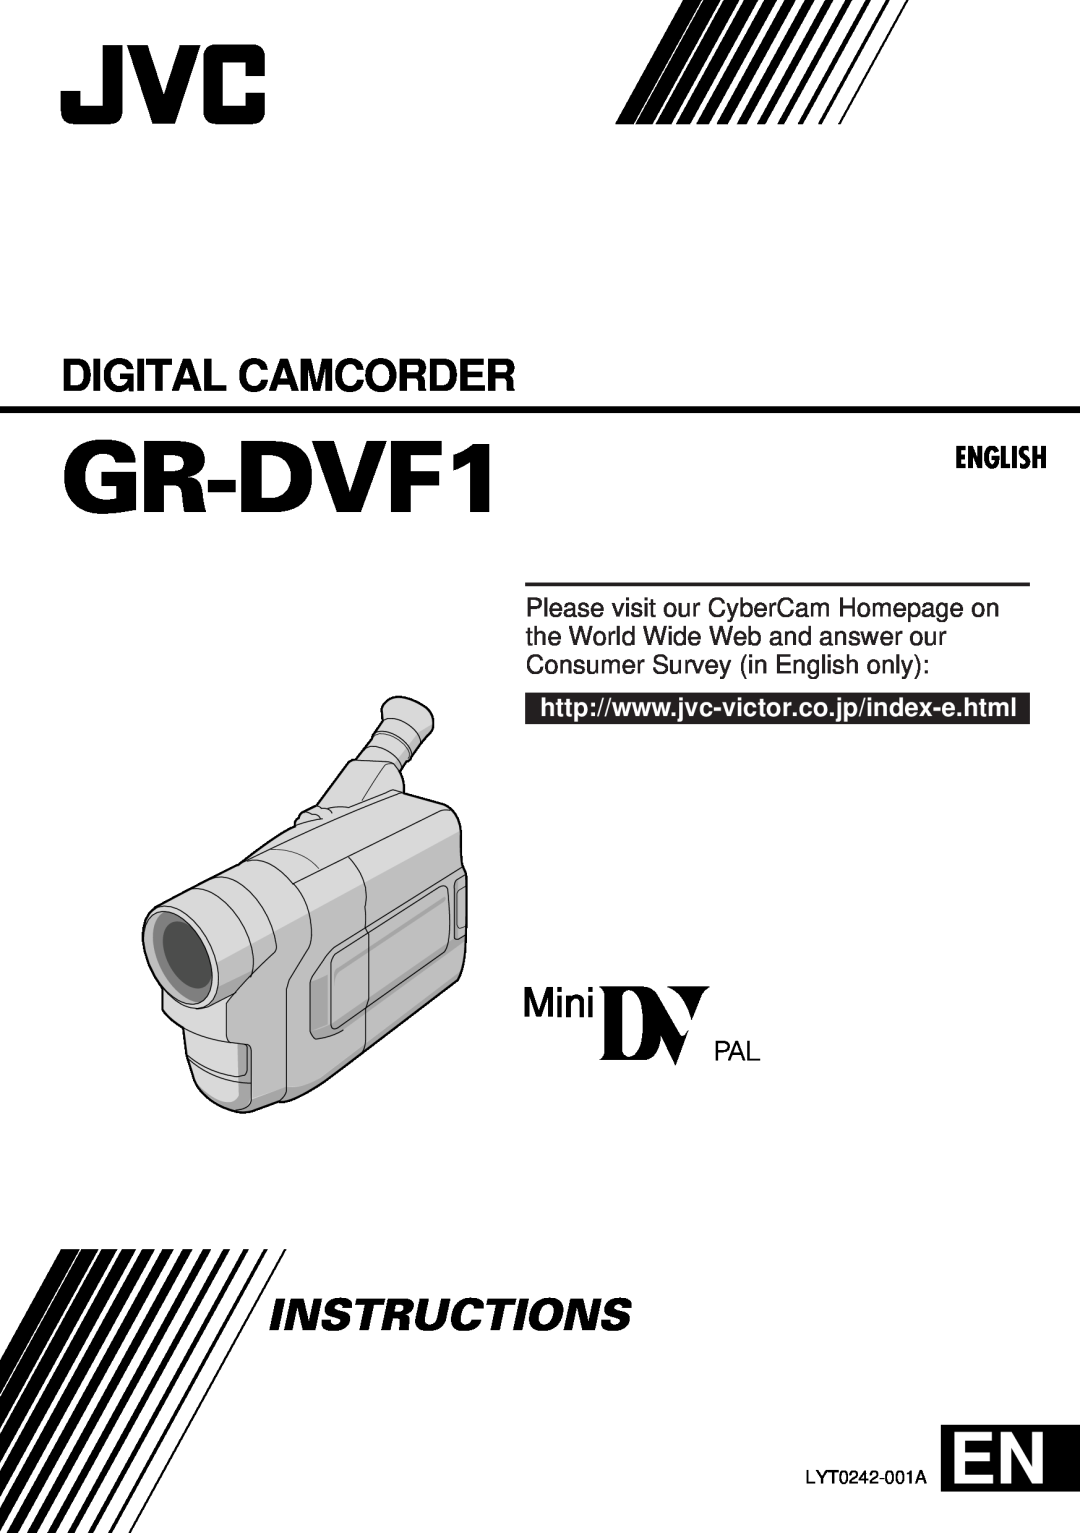 JVC manual English, GR-DVF1, Digital Camcorder, Instructions, LYT0242-001A EN 